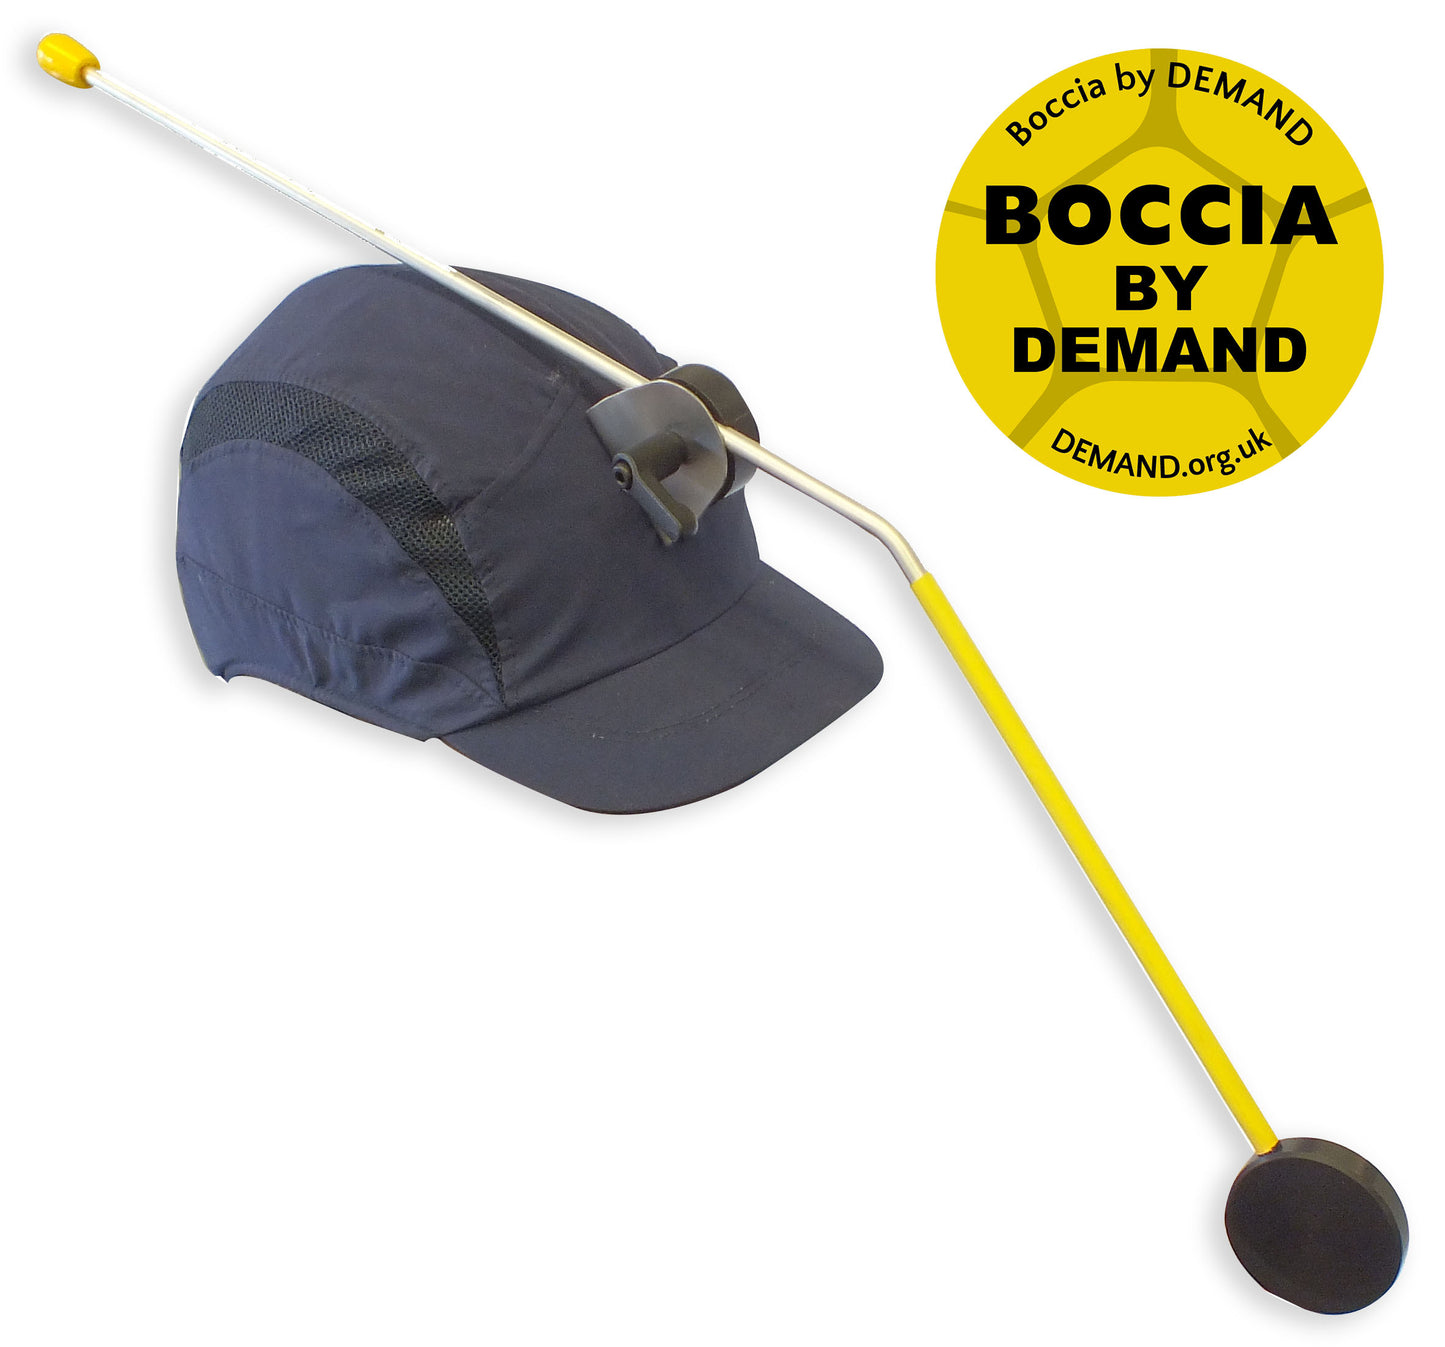 Boccia Headpointer with logo